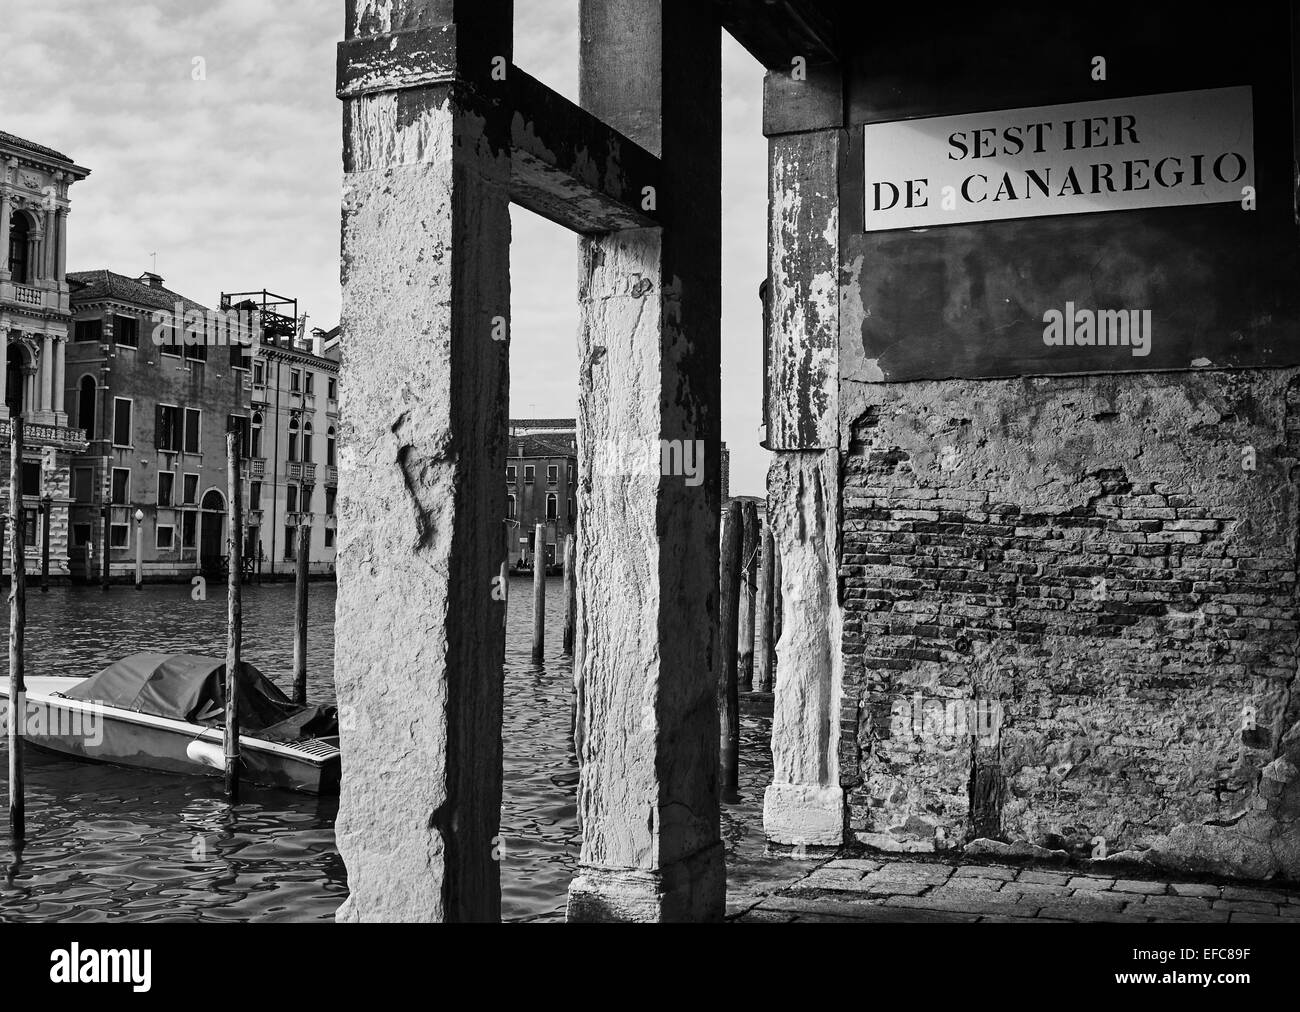 Bröckelnde Gebäude am Rande des Grand Canal in den Bezirk Canaregio Venedig Veneto Italien Europa Stockfoto